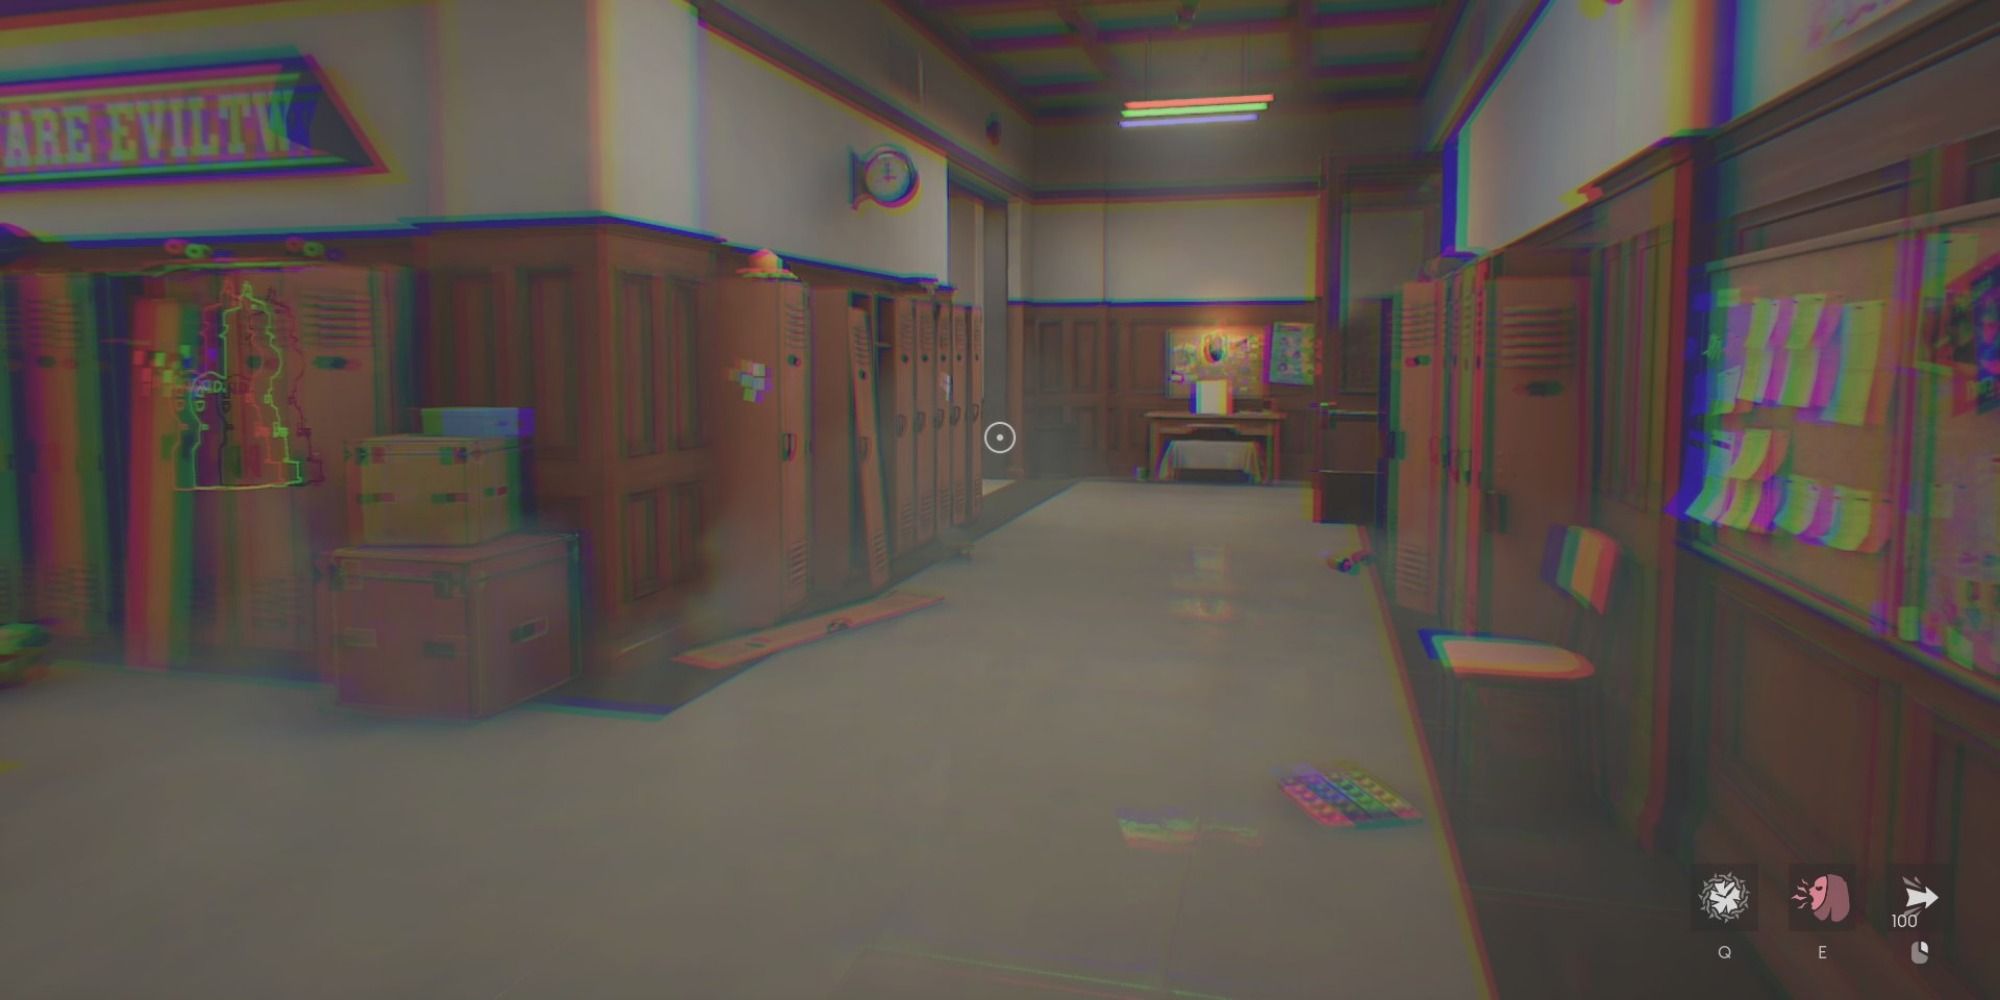 The Banshee screams down a School hallway